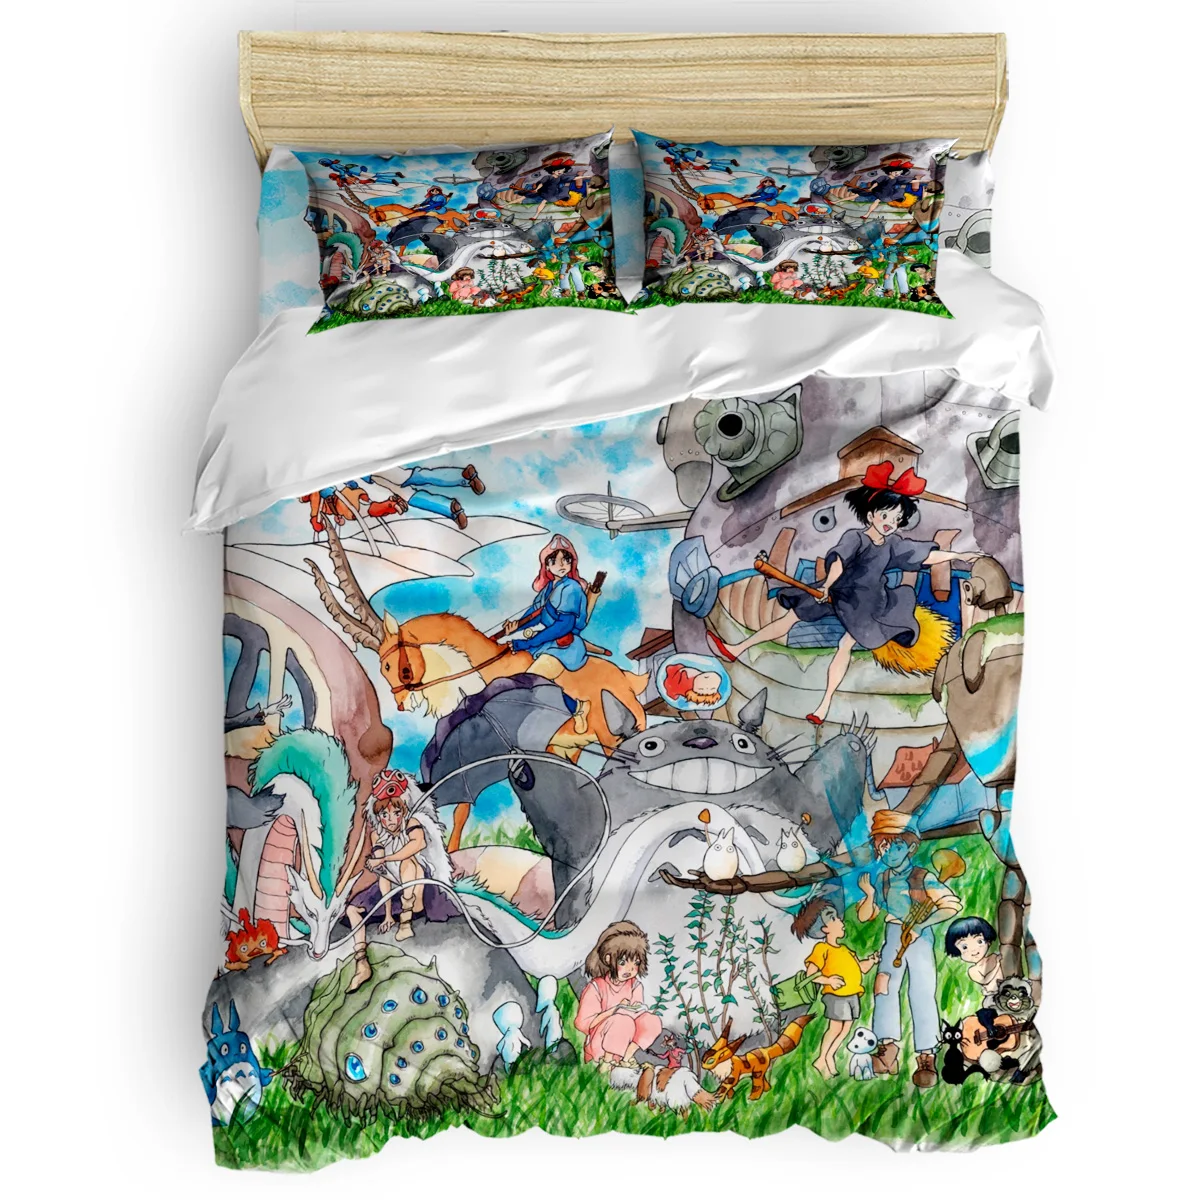 

Kawaii Ghibli Duvet Cover Set Cartoon Bed Sheets Comforter Cover Pillowcases Twin Full Queen King Size 4pcs Bedding Sets